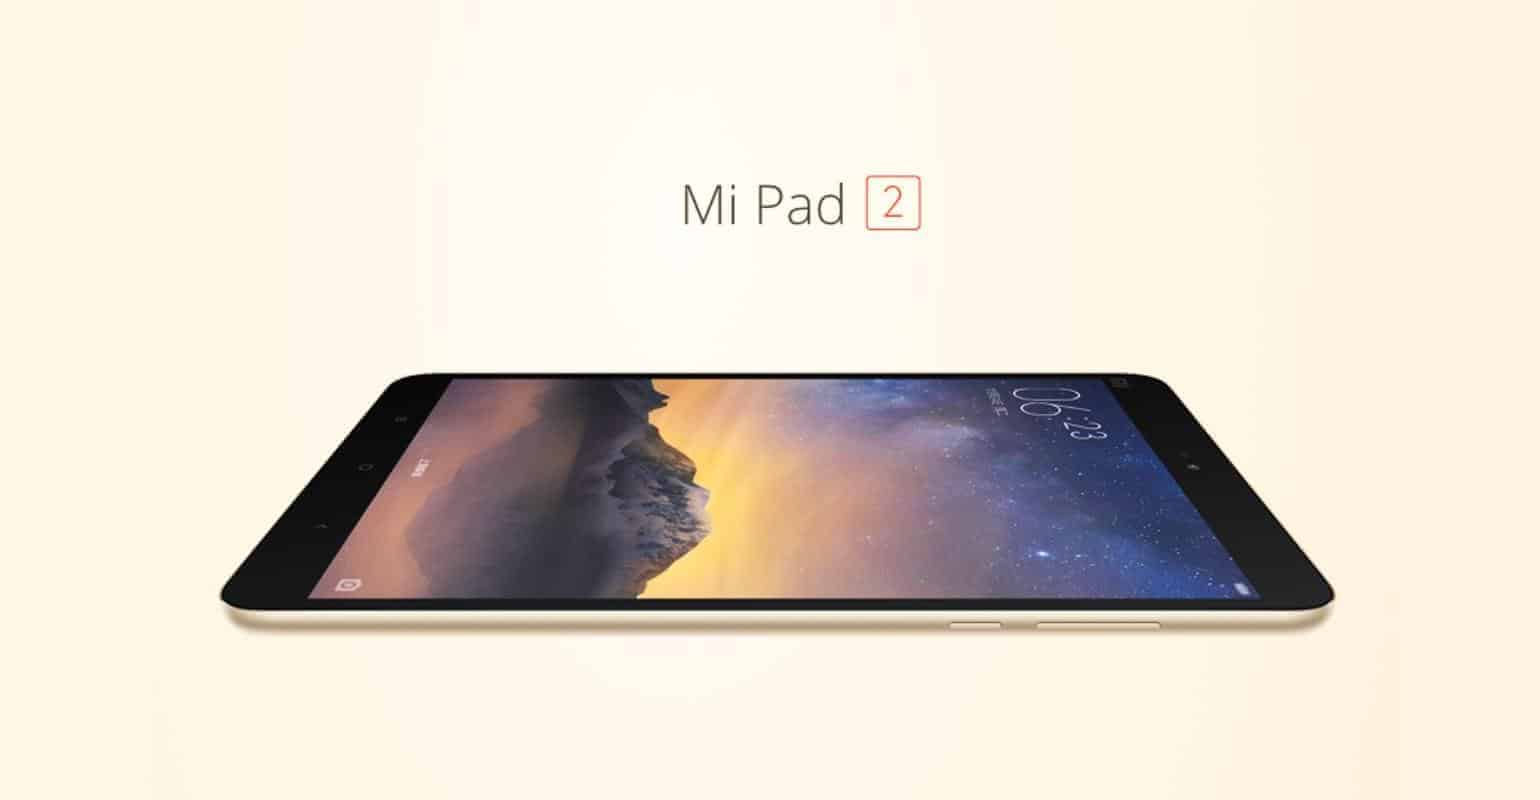 AnTuTu : Xiaomi Mi Pad 2 is krachtiger dan gedacht